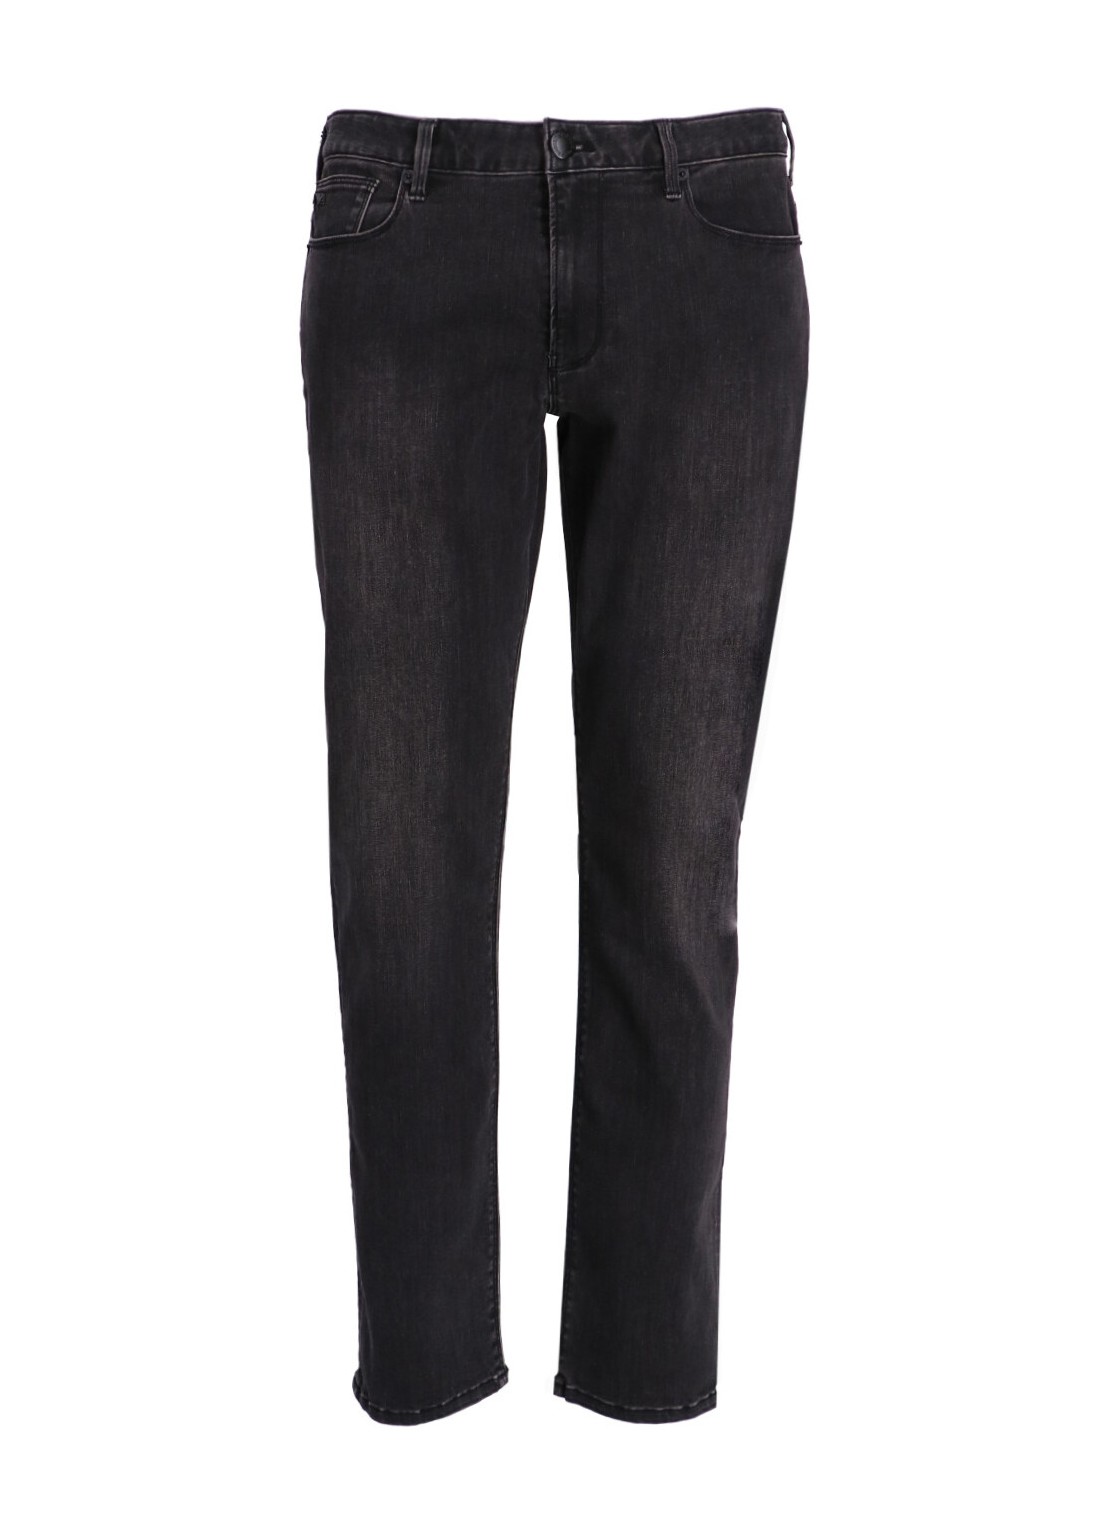 Pantalon jeans emporio armani denim manj06 - 8n1j061dhdz 0006 talla gris
 